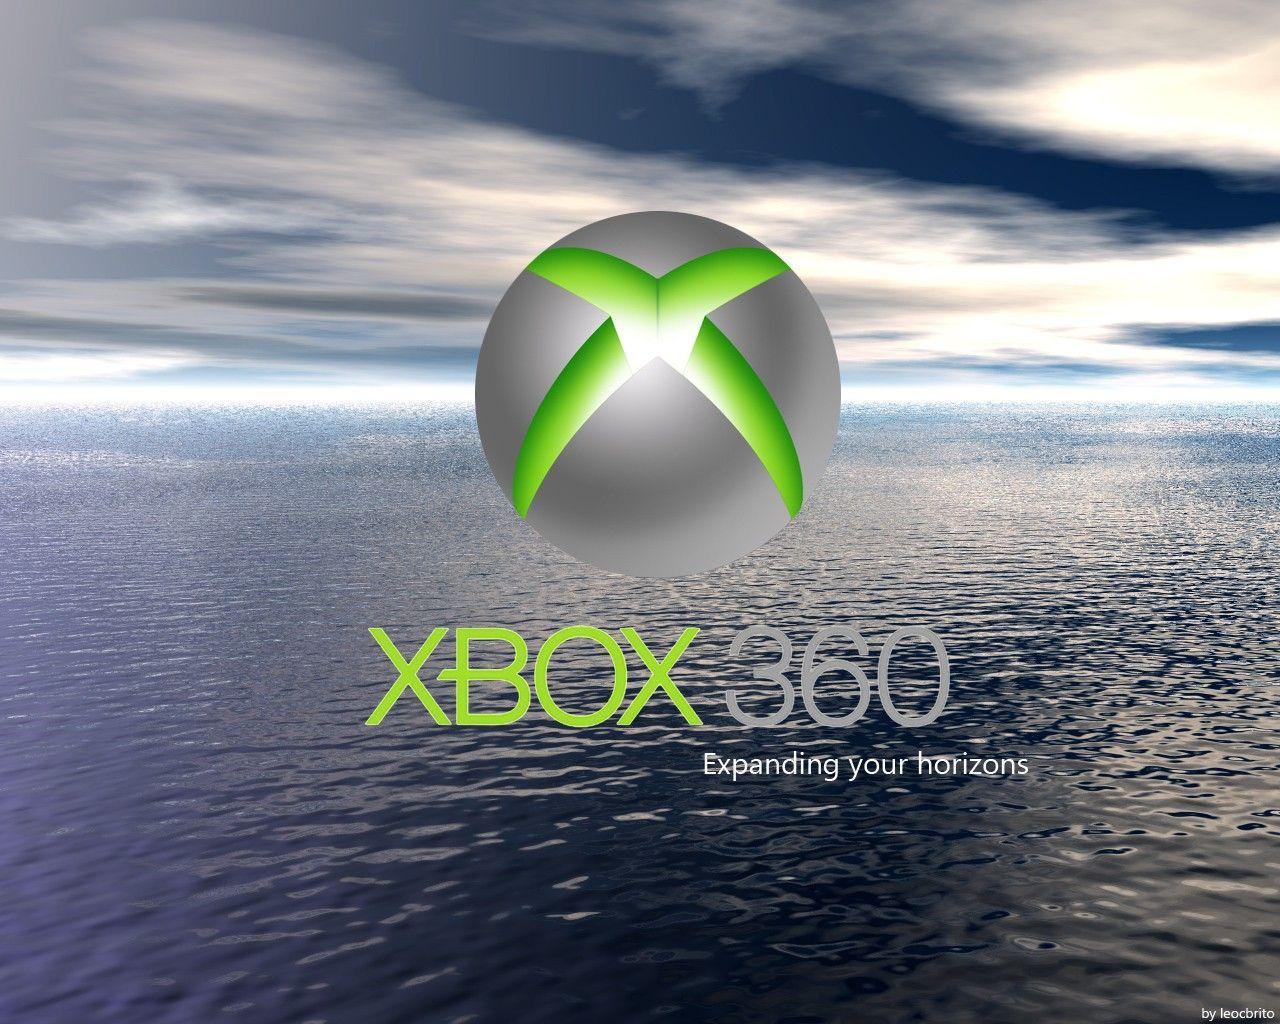 Xbox 360 Wallpaper